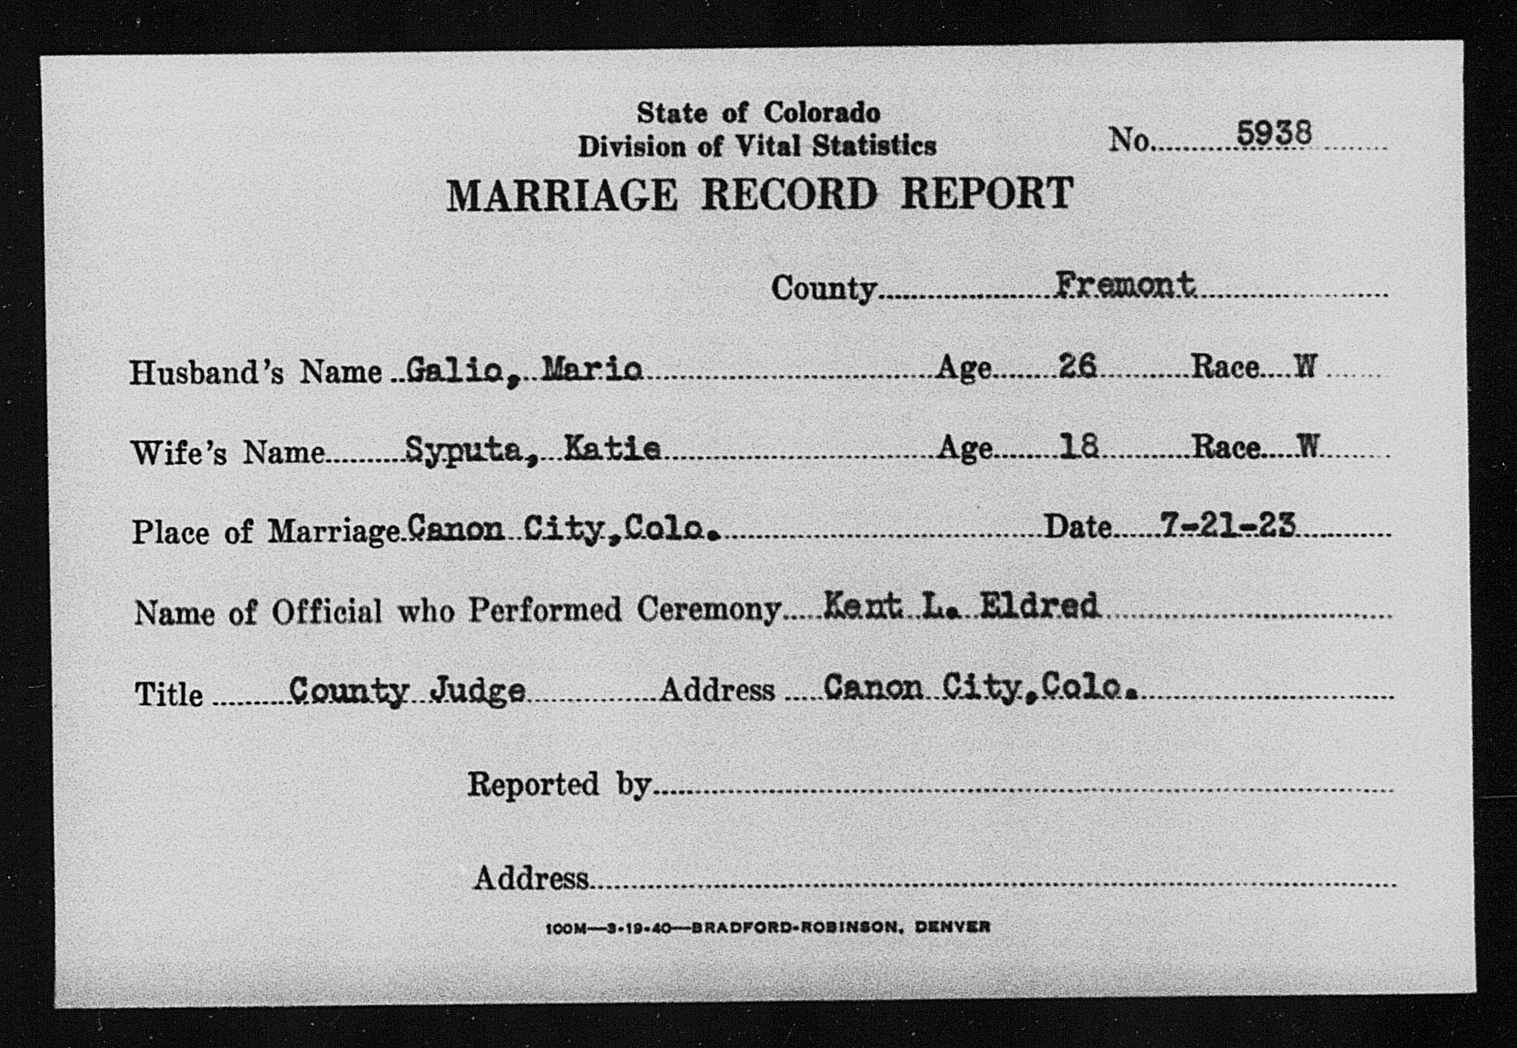 Marriage record report of Mario Goglio and Katie Syputa